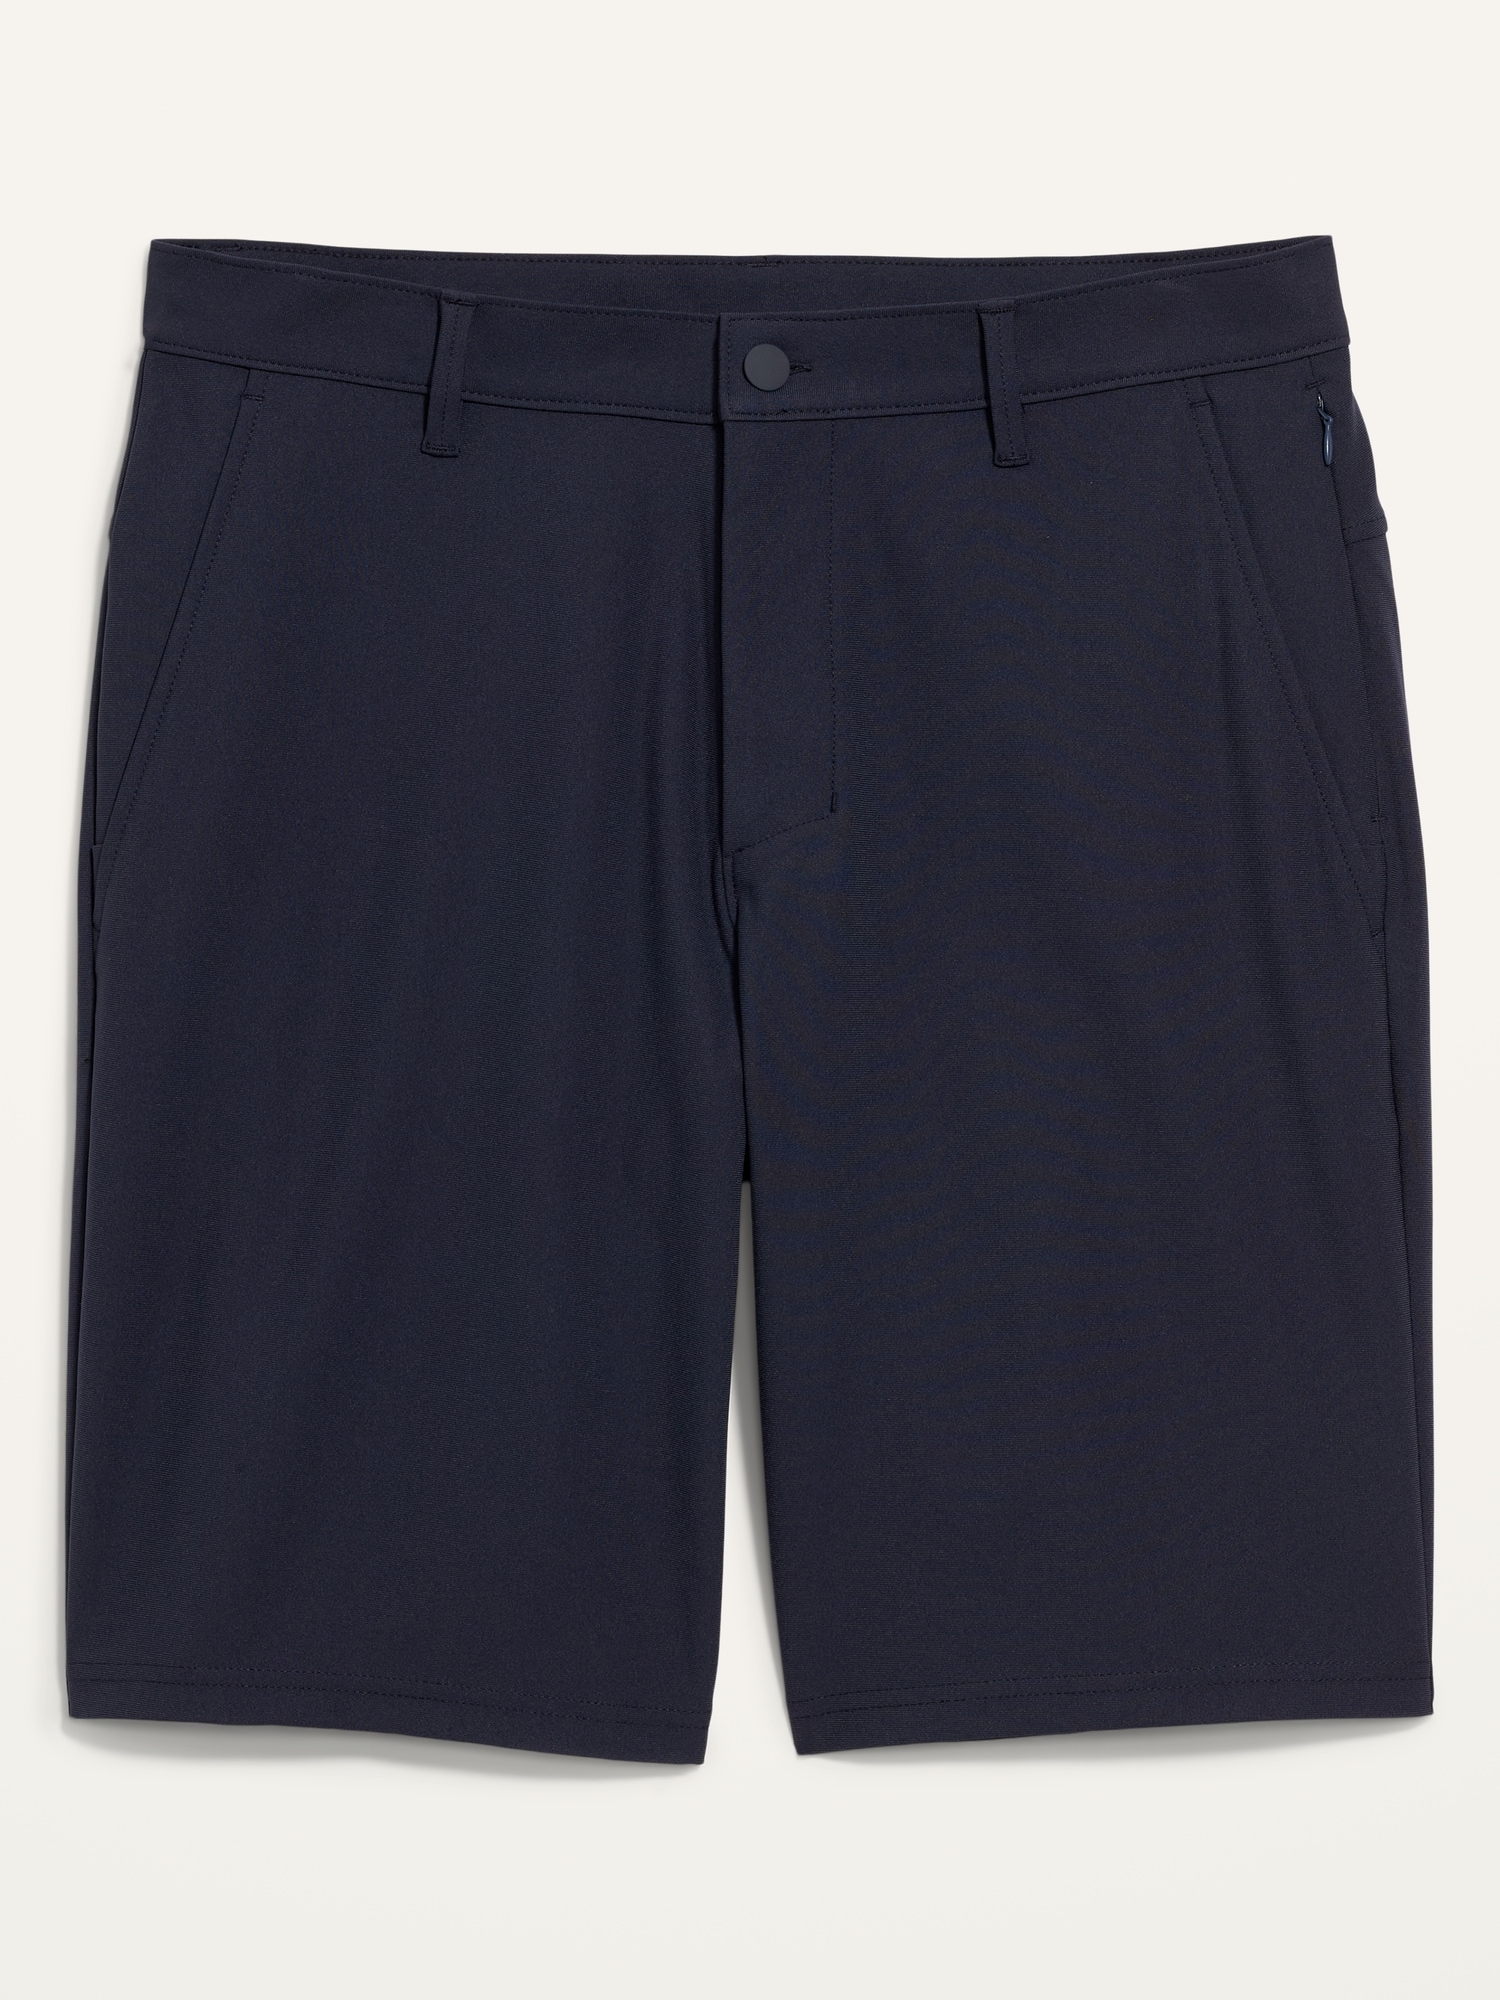 Hybrid Tech Chino Shorts for Men -- 10-inch inseam | Old Navy